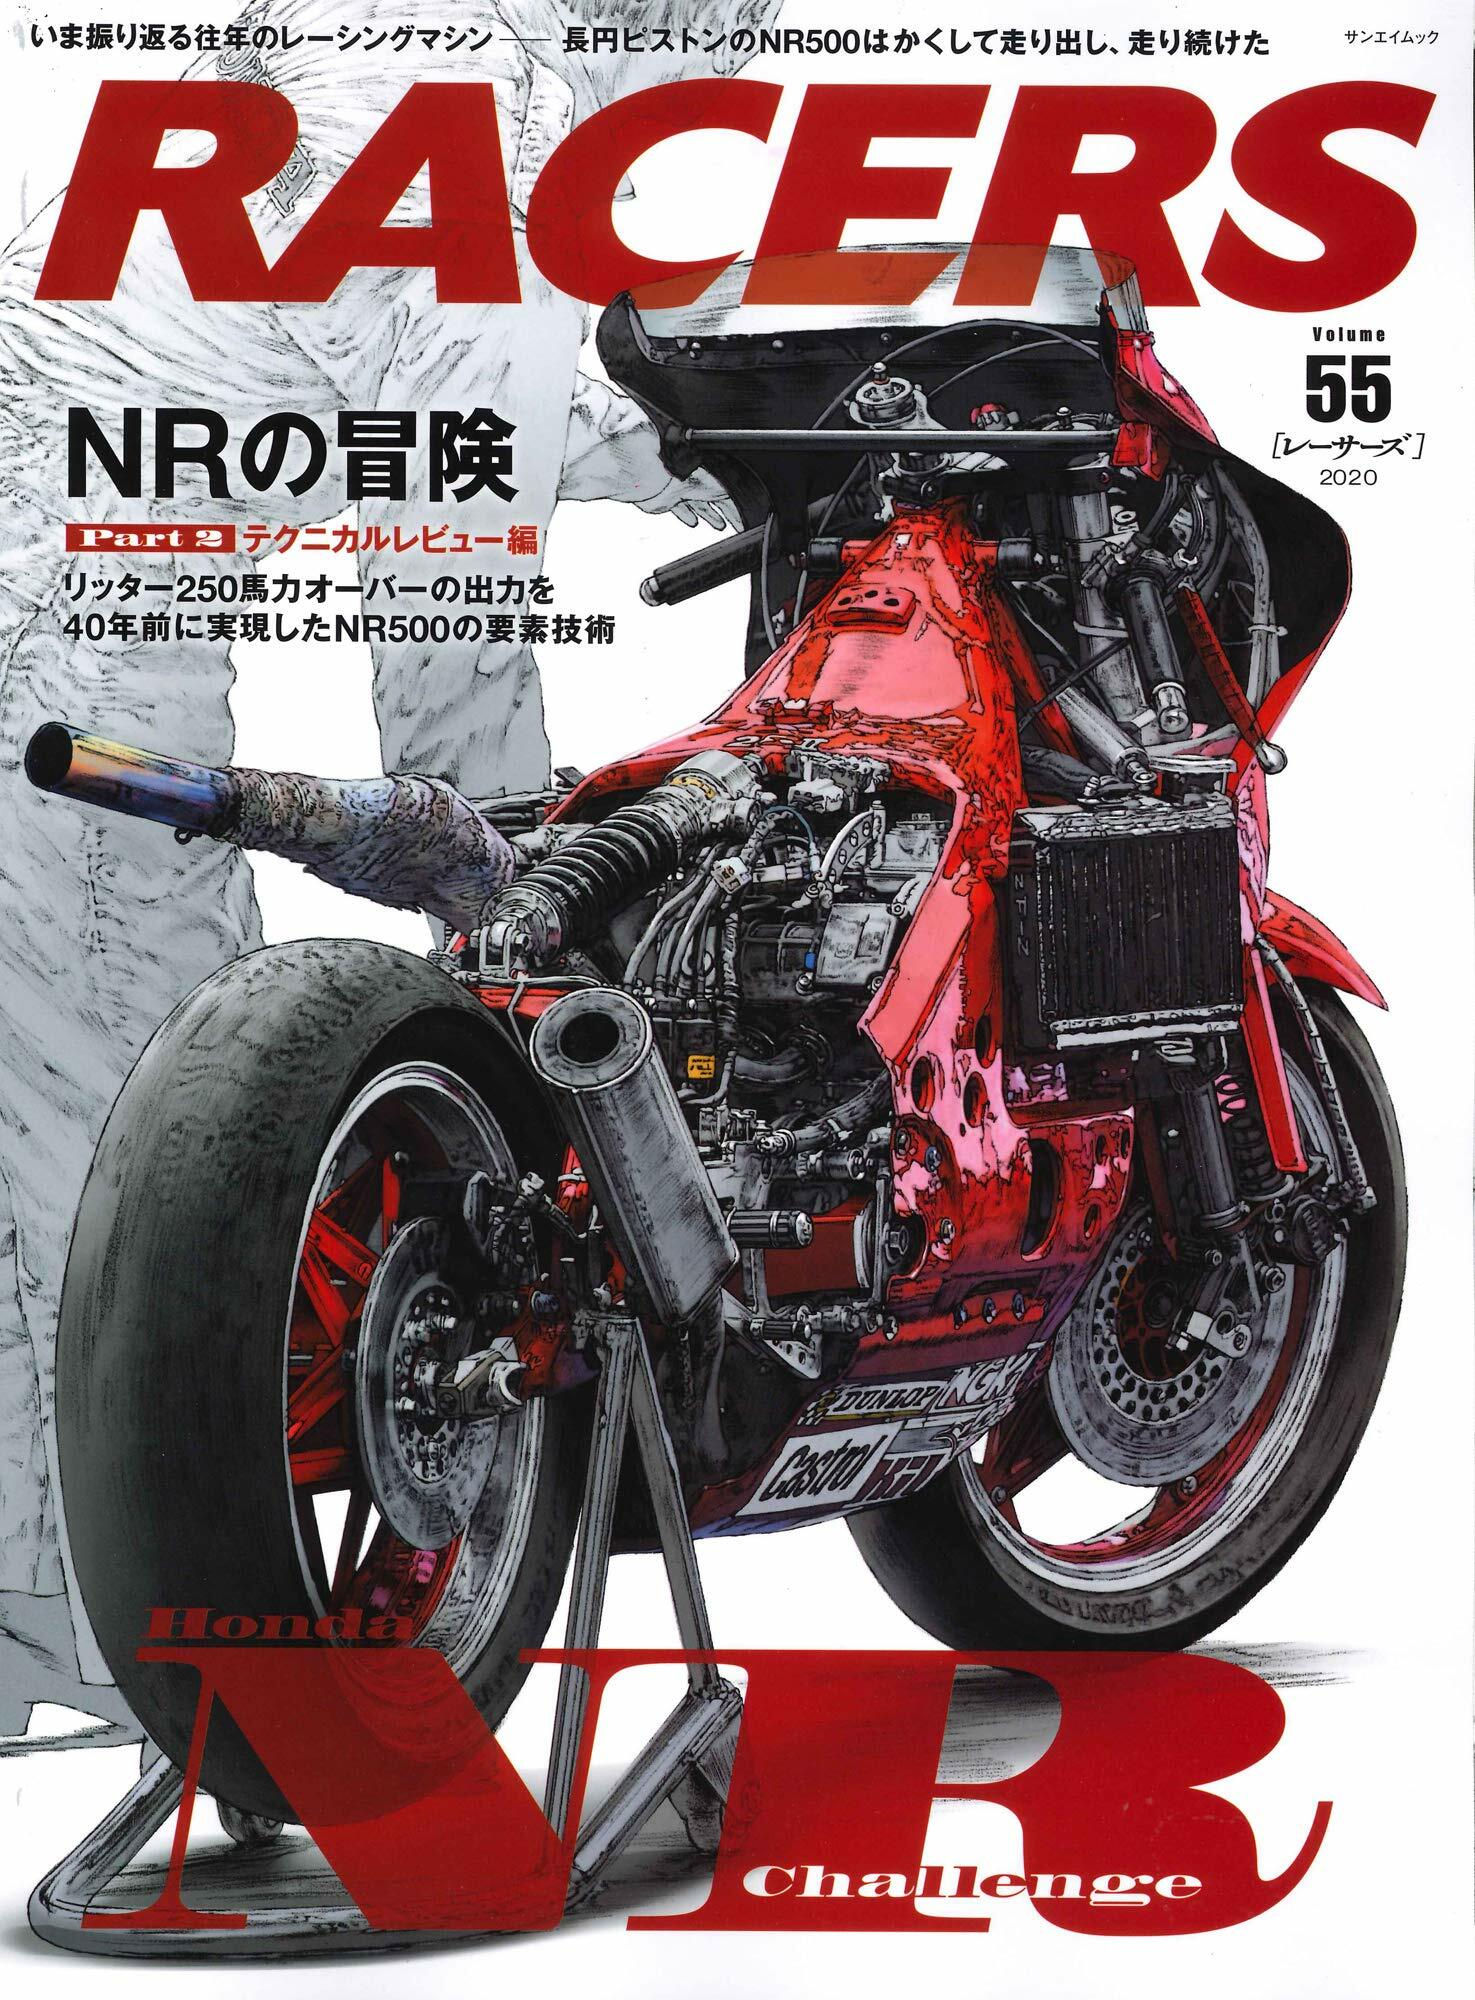 RACERS - レ-サ-ズ - Vol.55 ホンダ NR500 Part.2